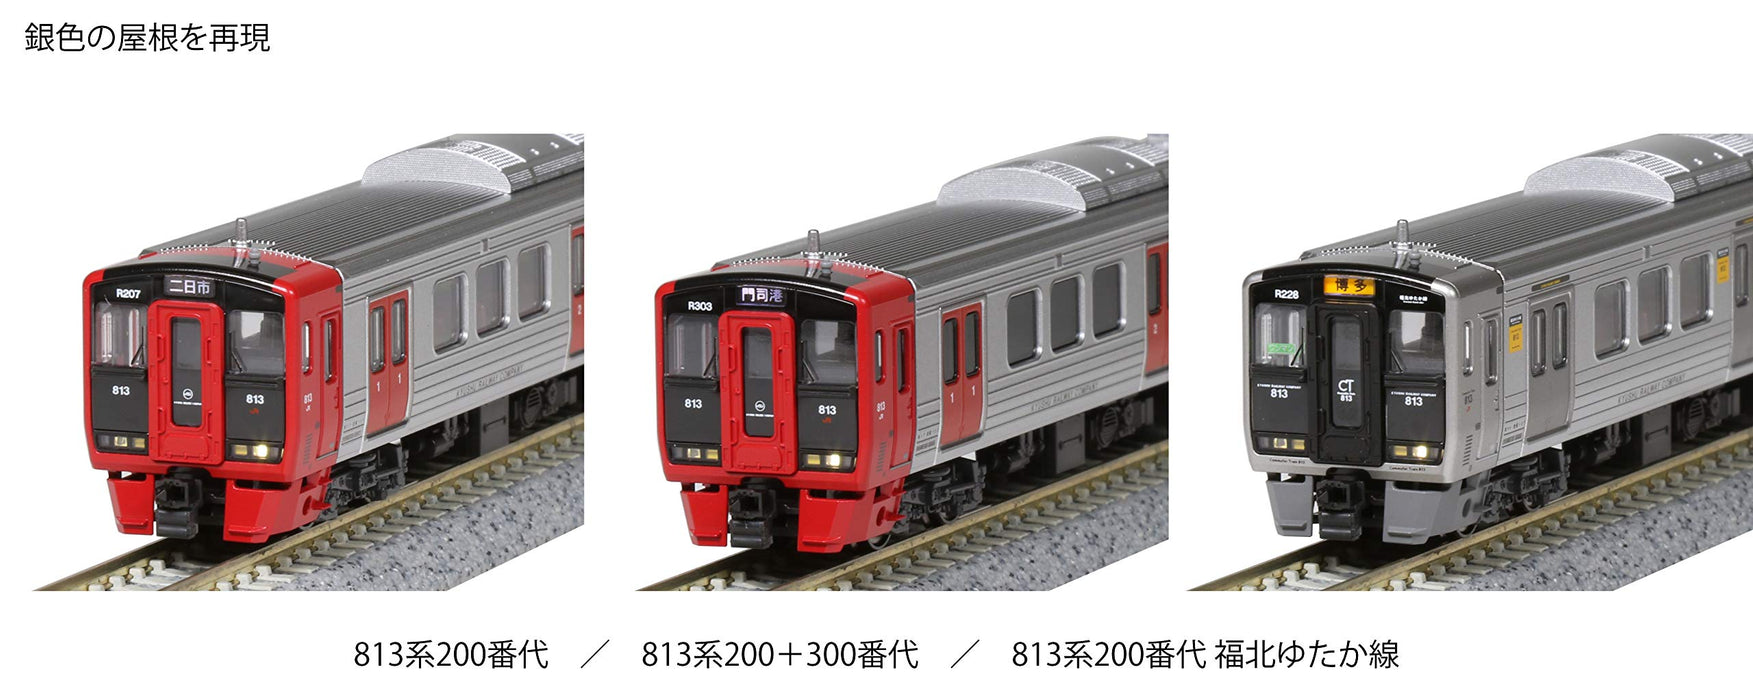 Kato N Gauge Série 813 Train miniature 3 voitures Ligne Fukuhoku Yutaka